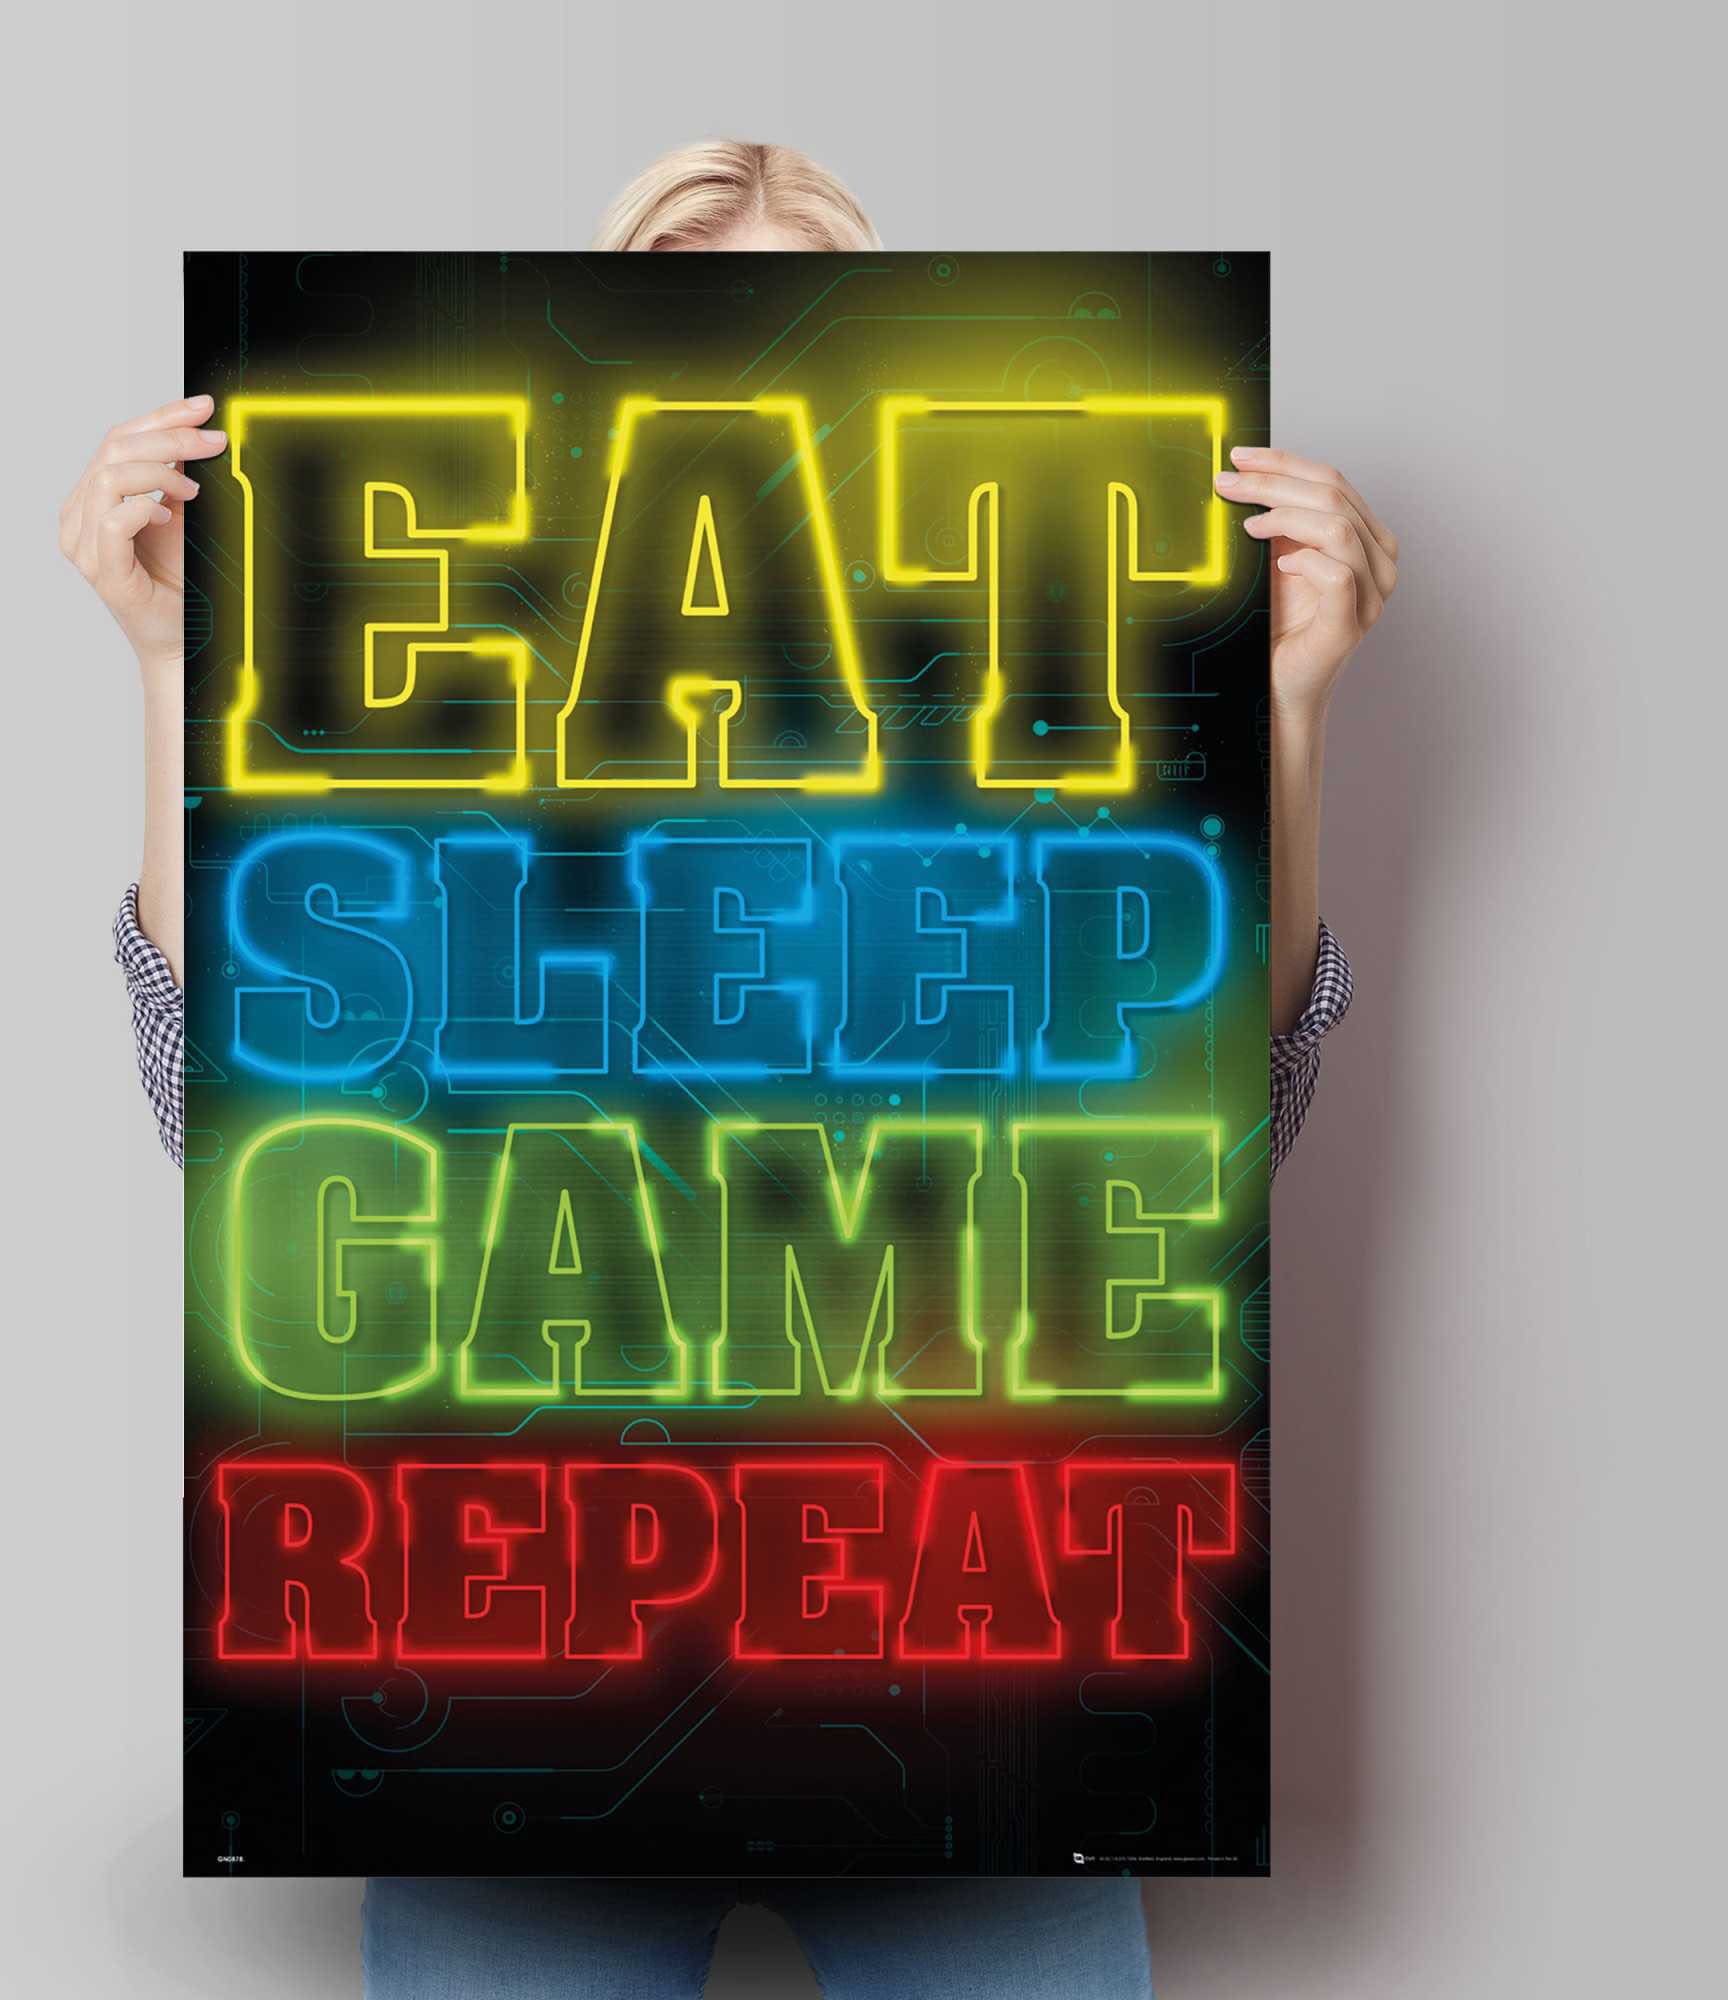 bestellen (1 Eat »Poster Poster auf Reinders! Zocken Raten sleep repeat«, Spiele, St.) game